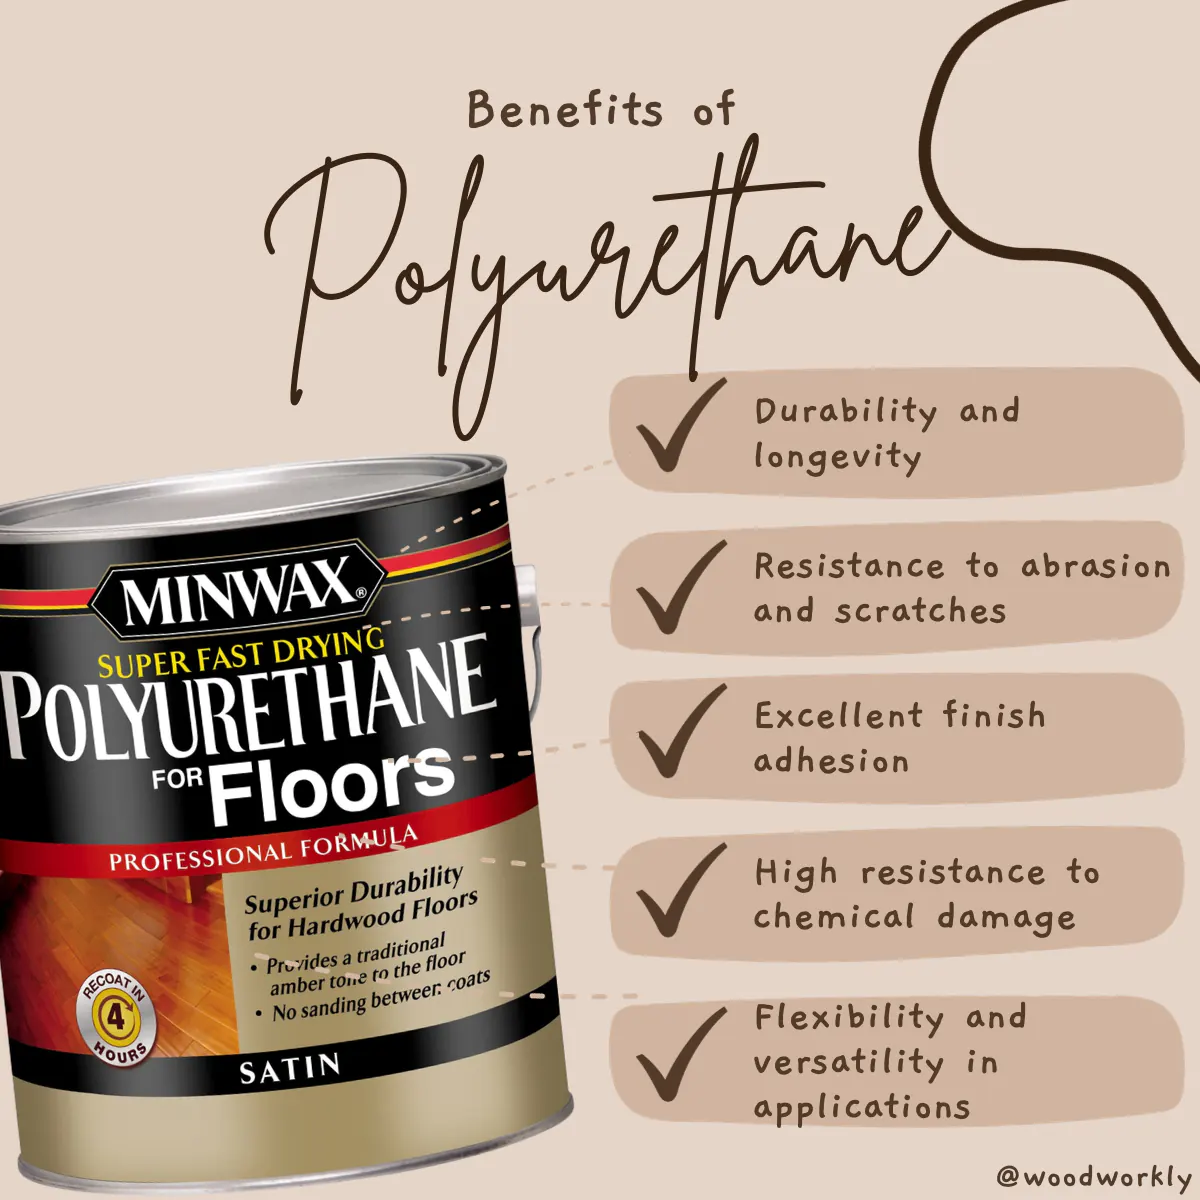 Benefits of polyurethane